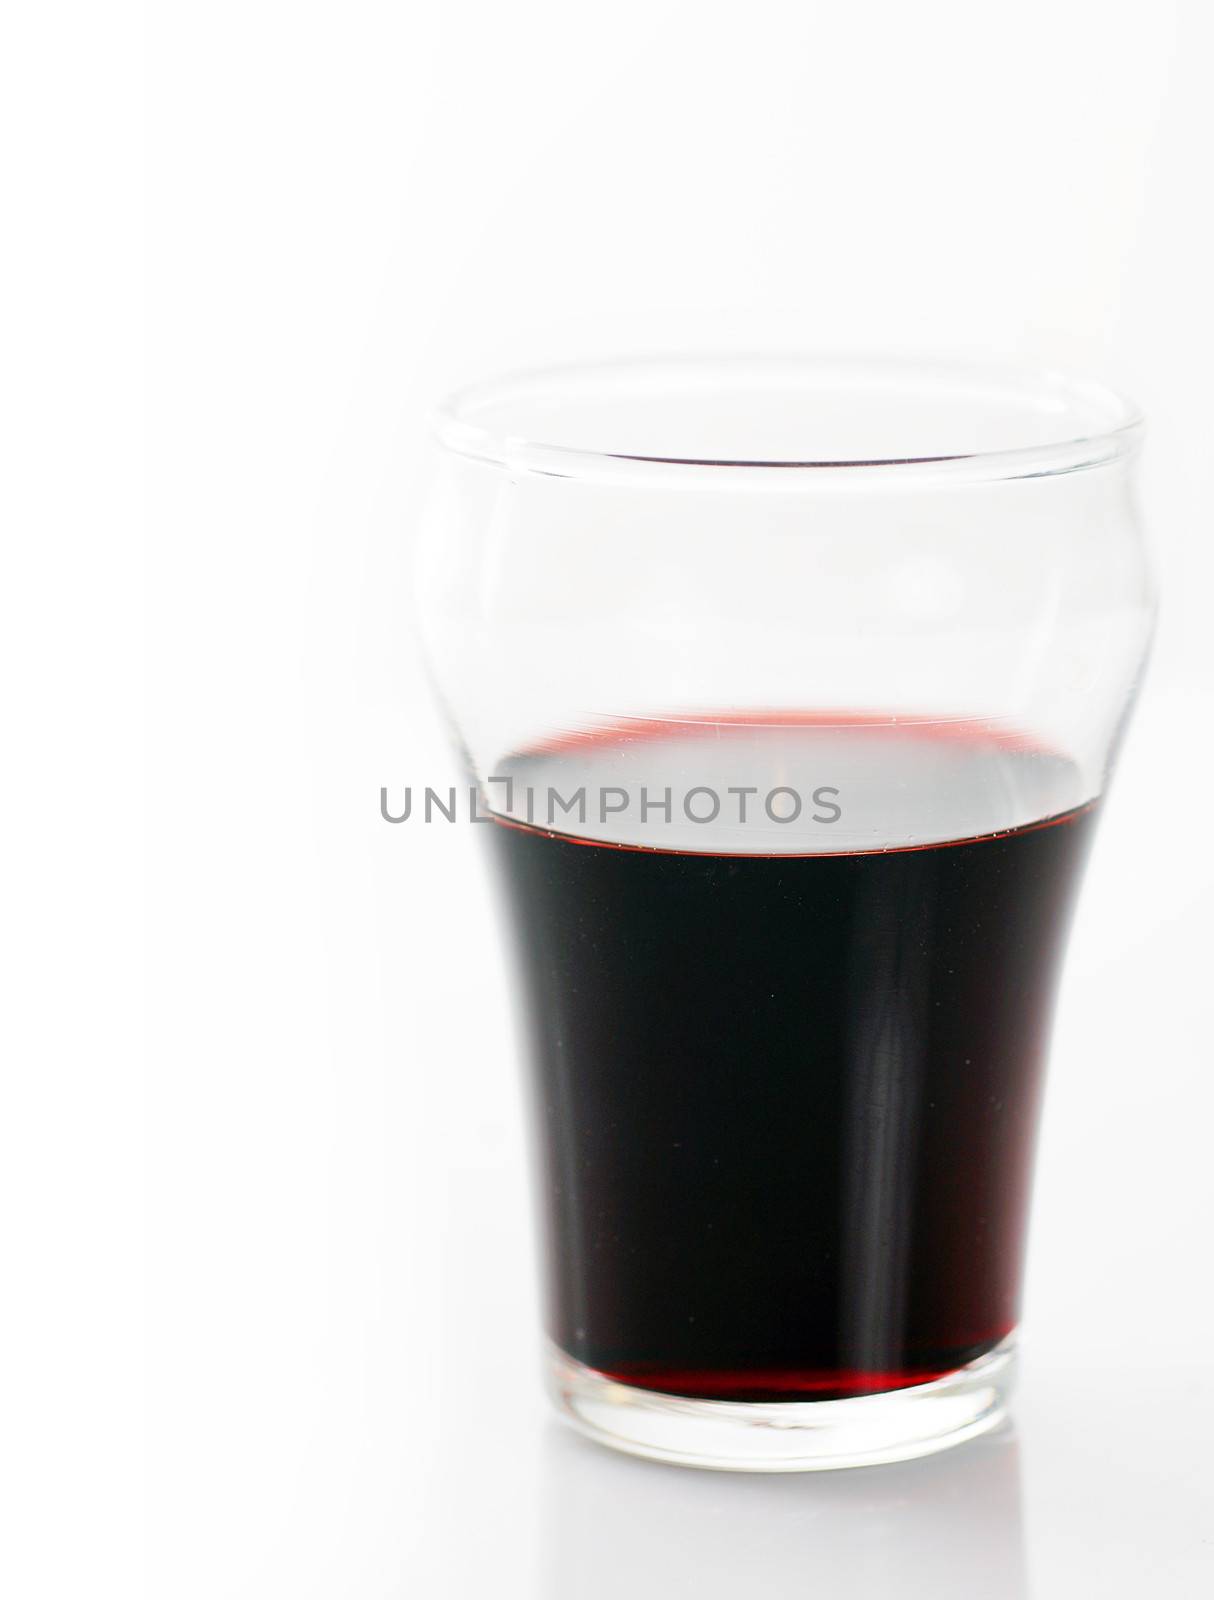 Shot of port wine by Mirage3